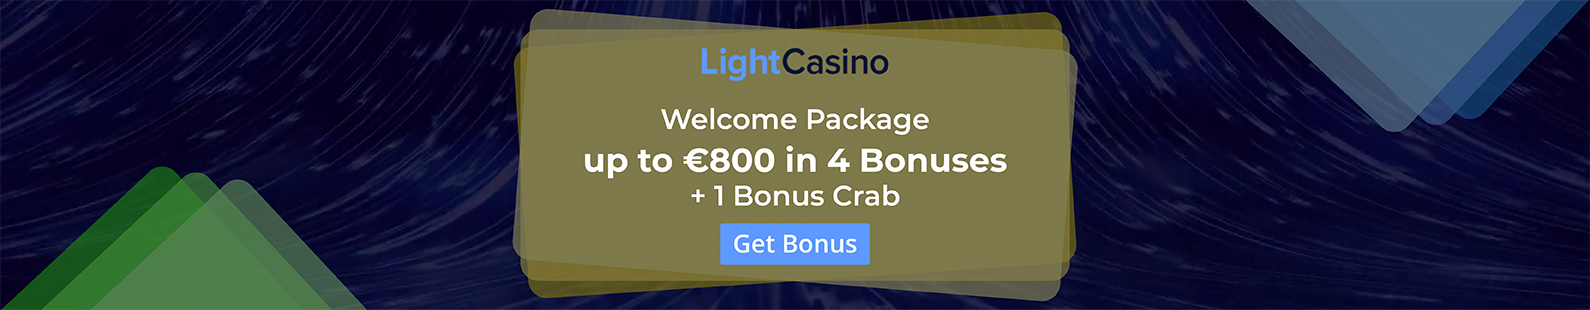 LightCasino Welcome Package of €800 - Big